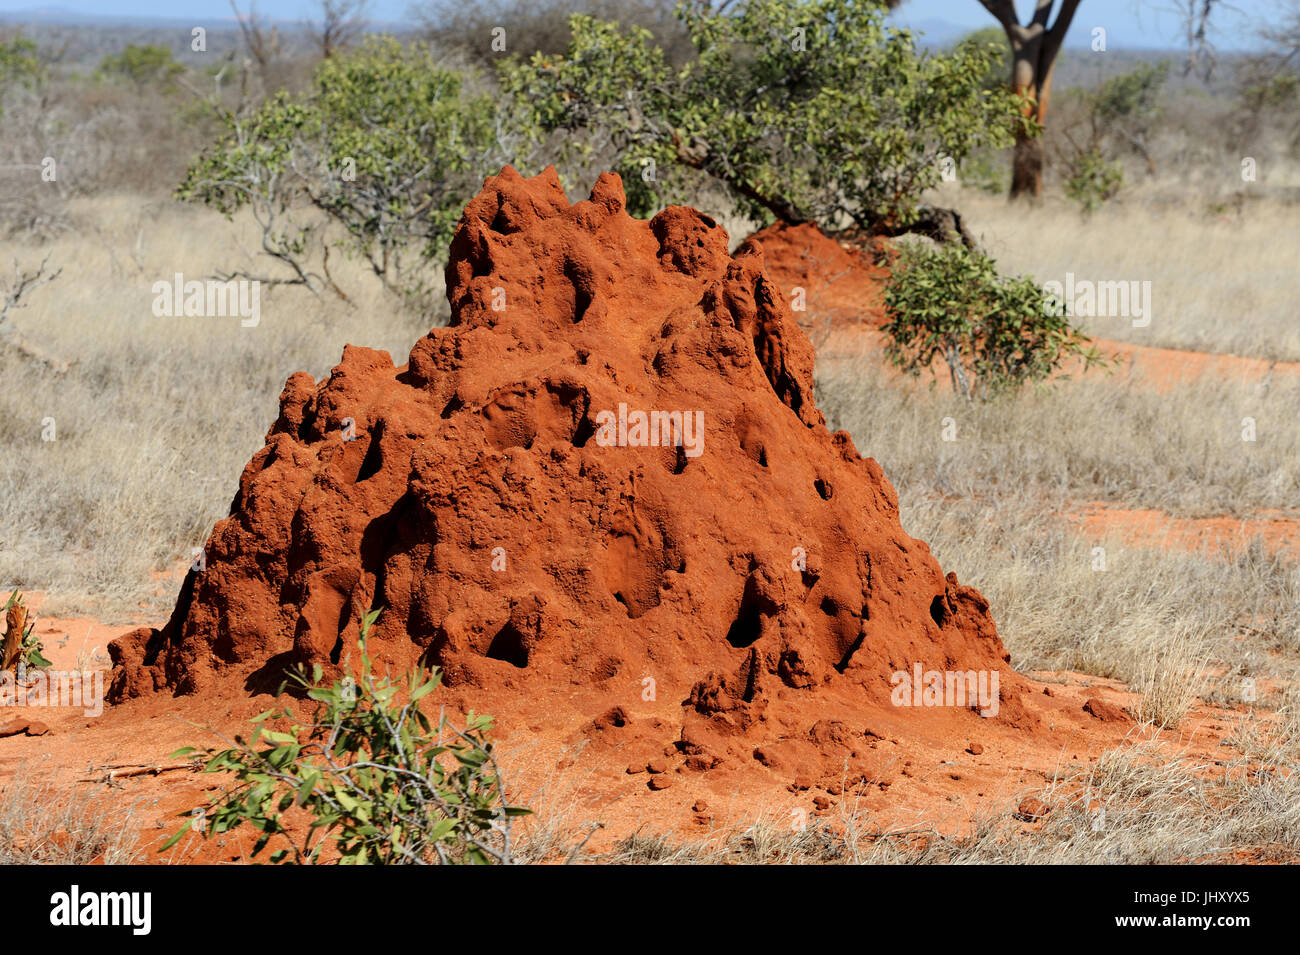 Termite mound in savanna in National park of Kenya Stock Photo